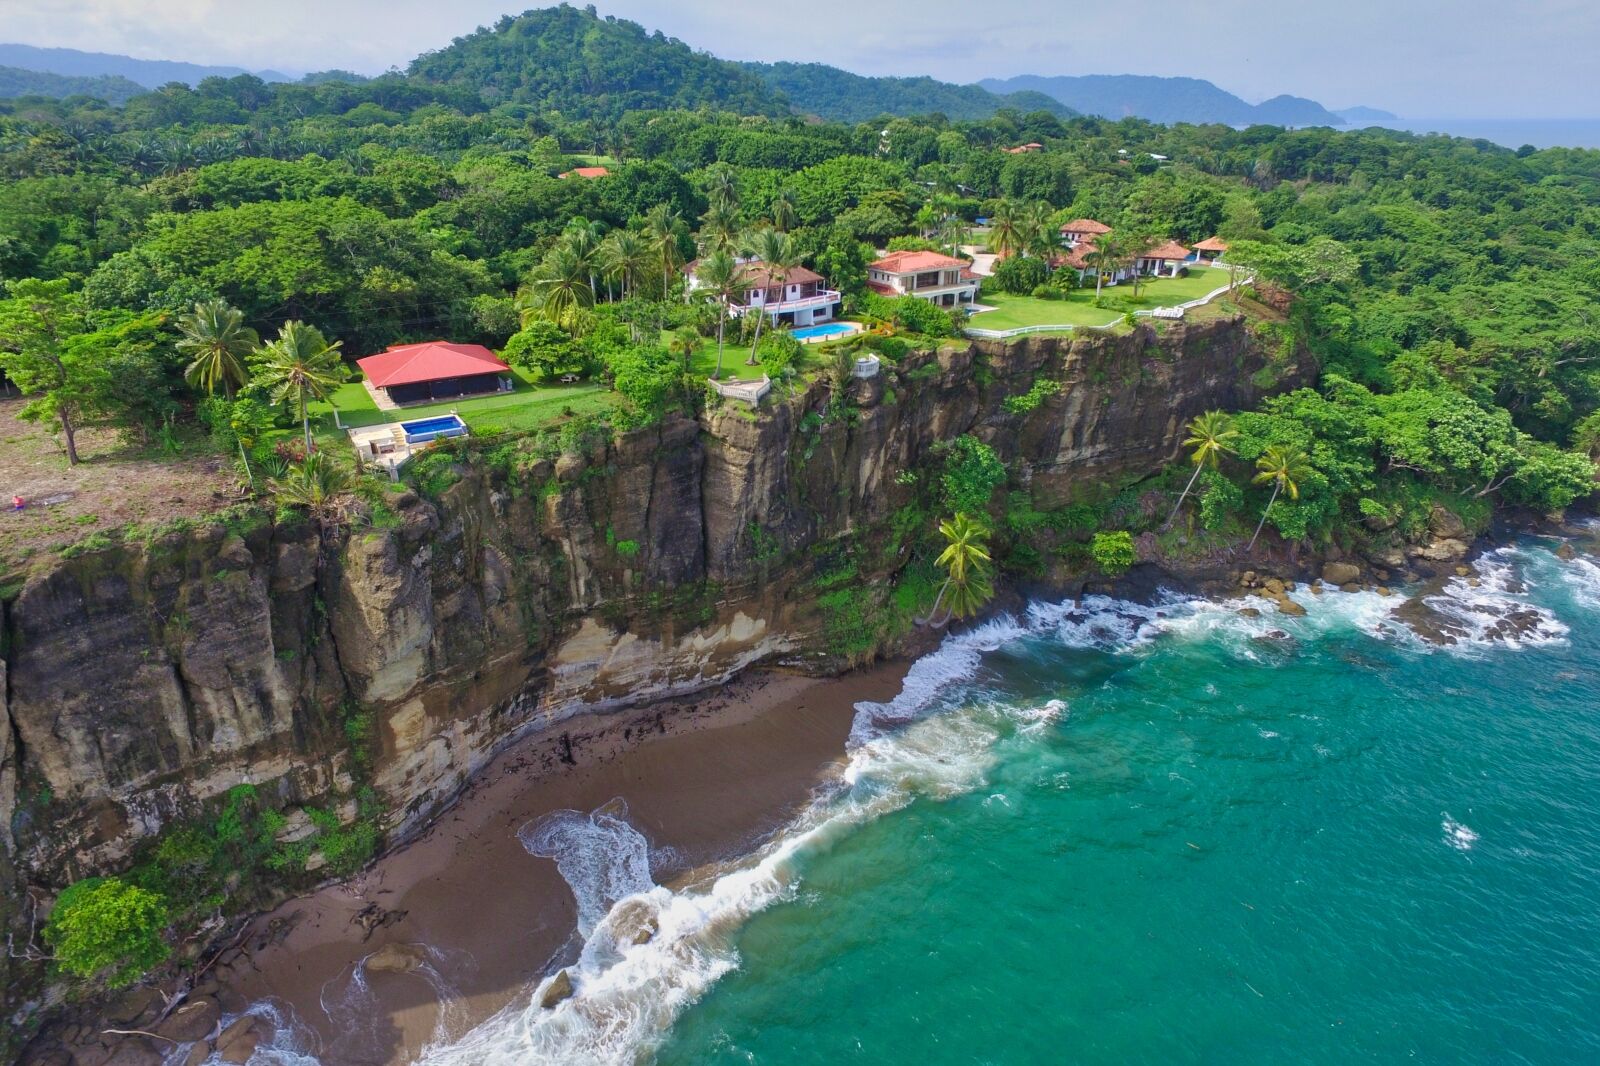  Luxury Ocean view villas in Santa Tersa Costa Rica one of the five blue zones 